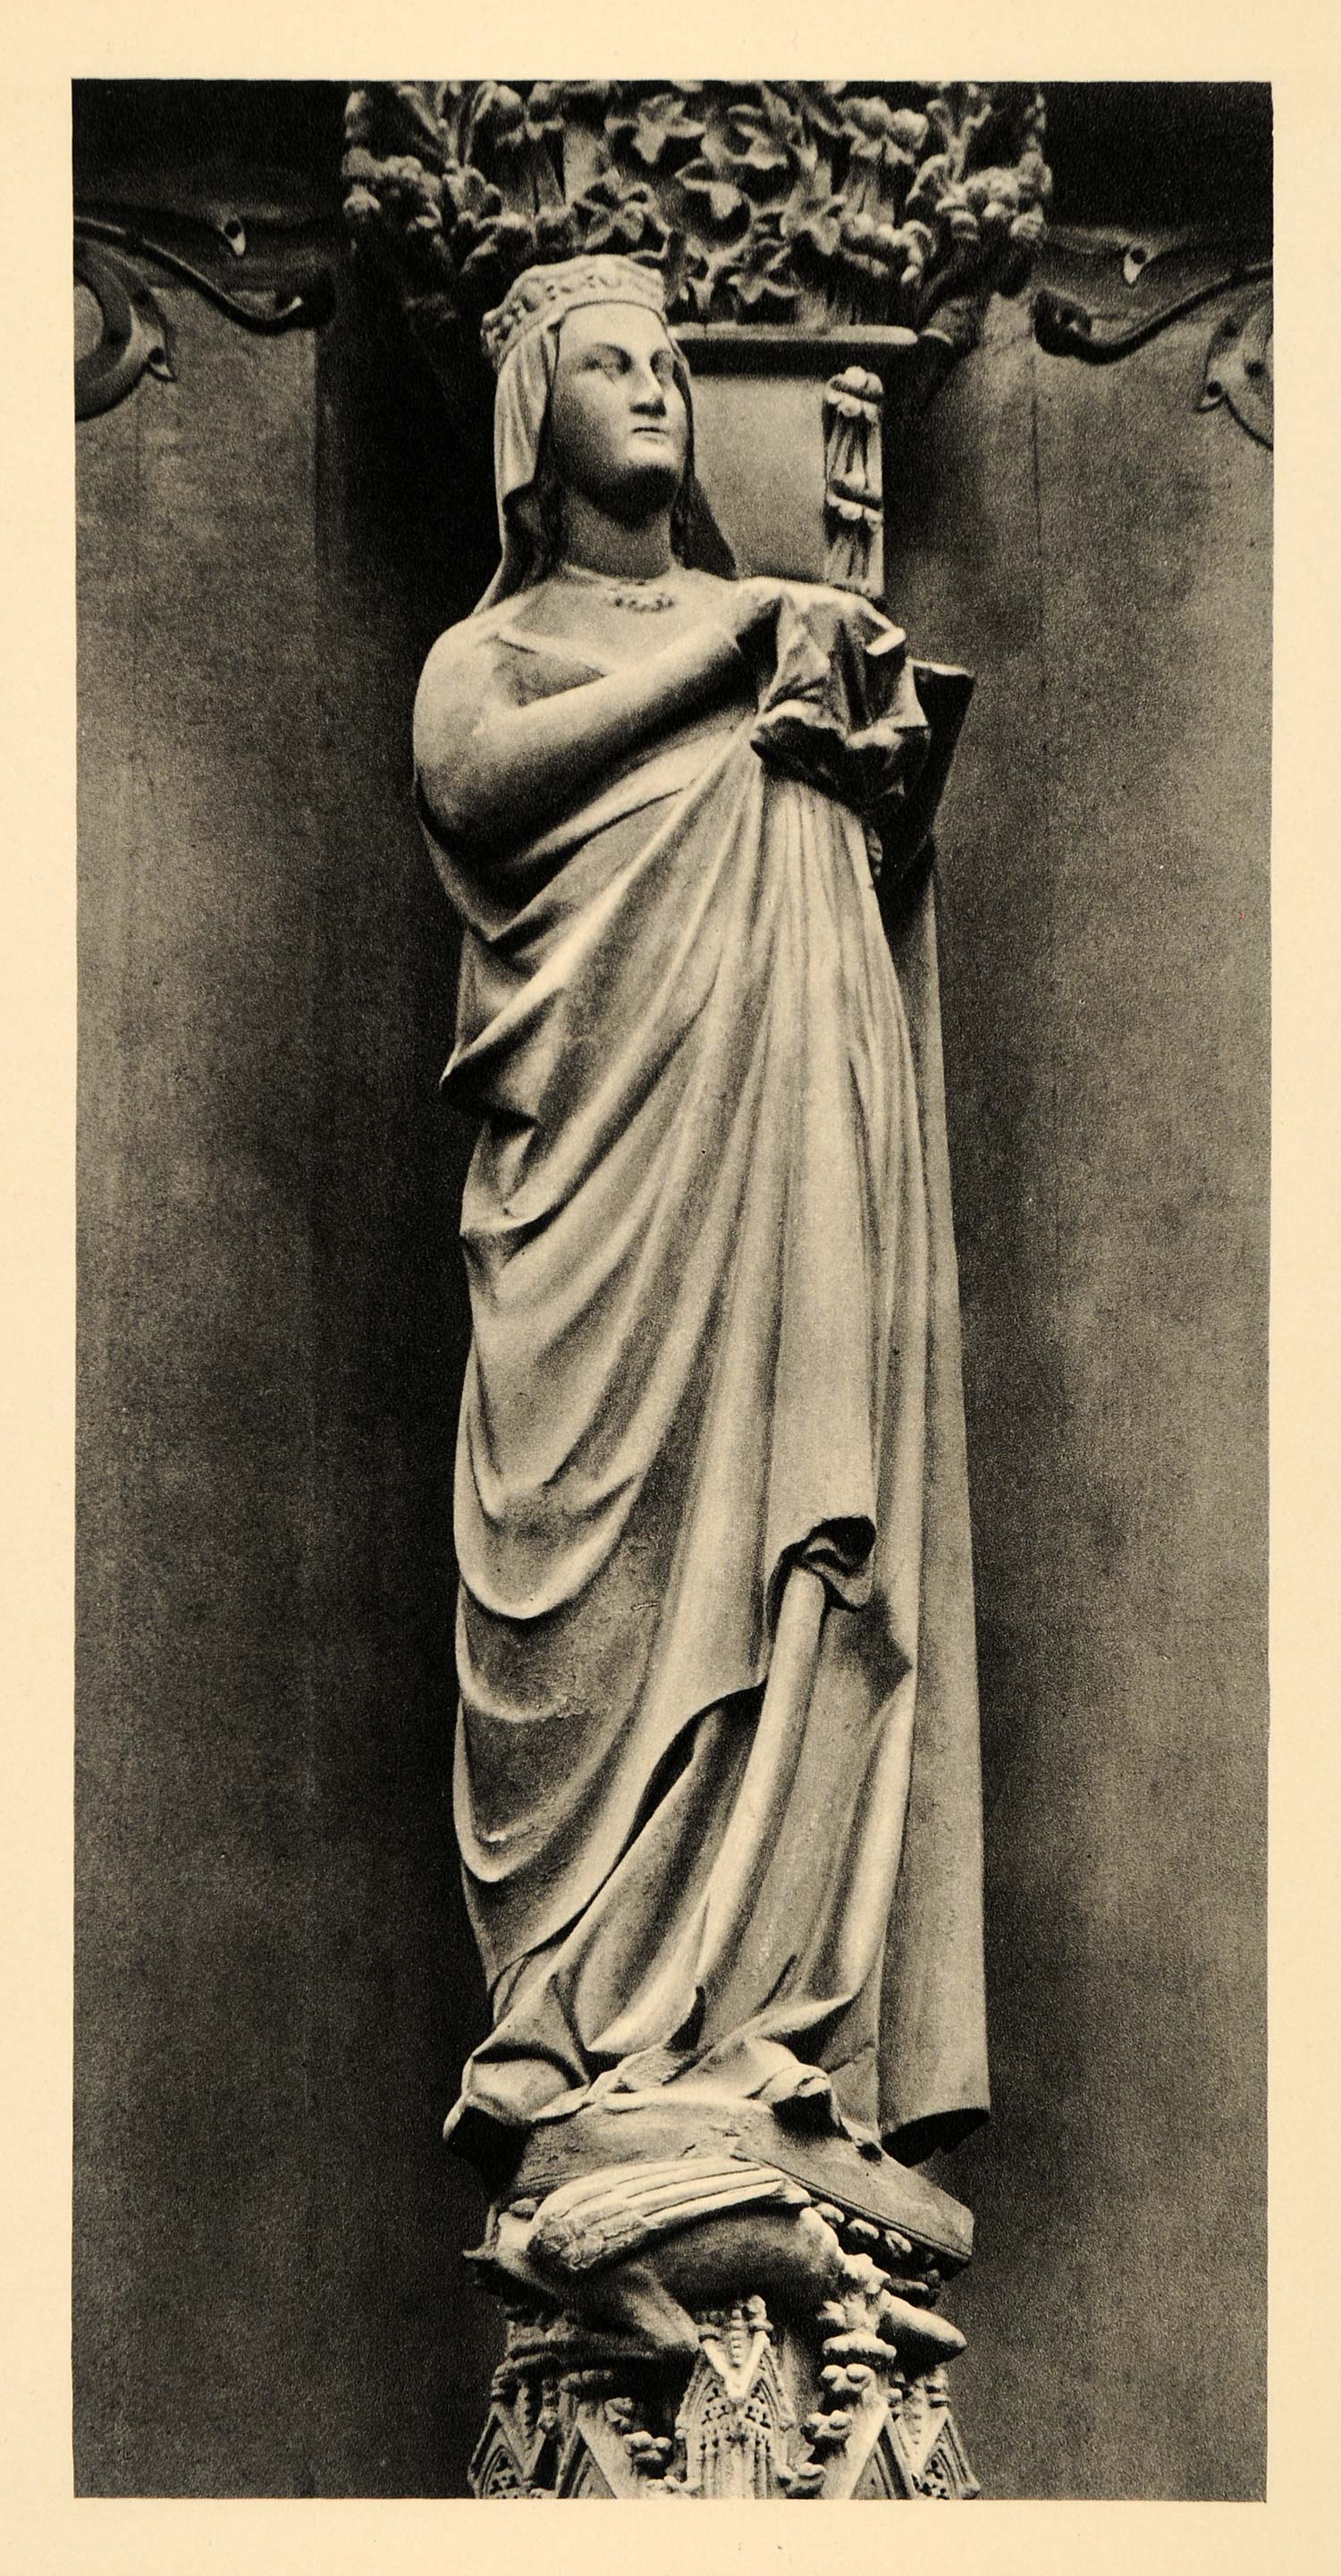 1937 Madonna Statue Virgin Mary Queen Notre Dame Paris - ORIGINAL CH2